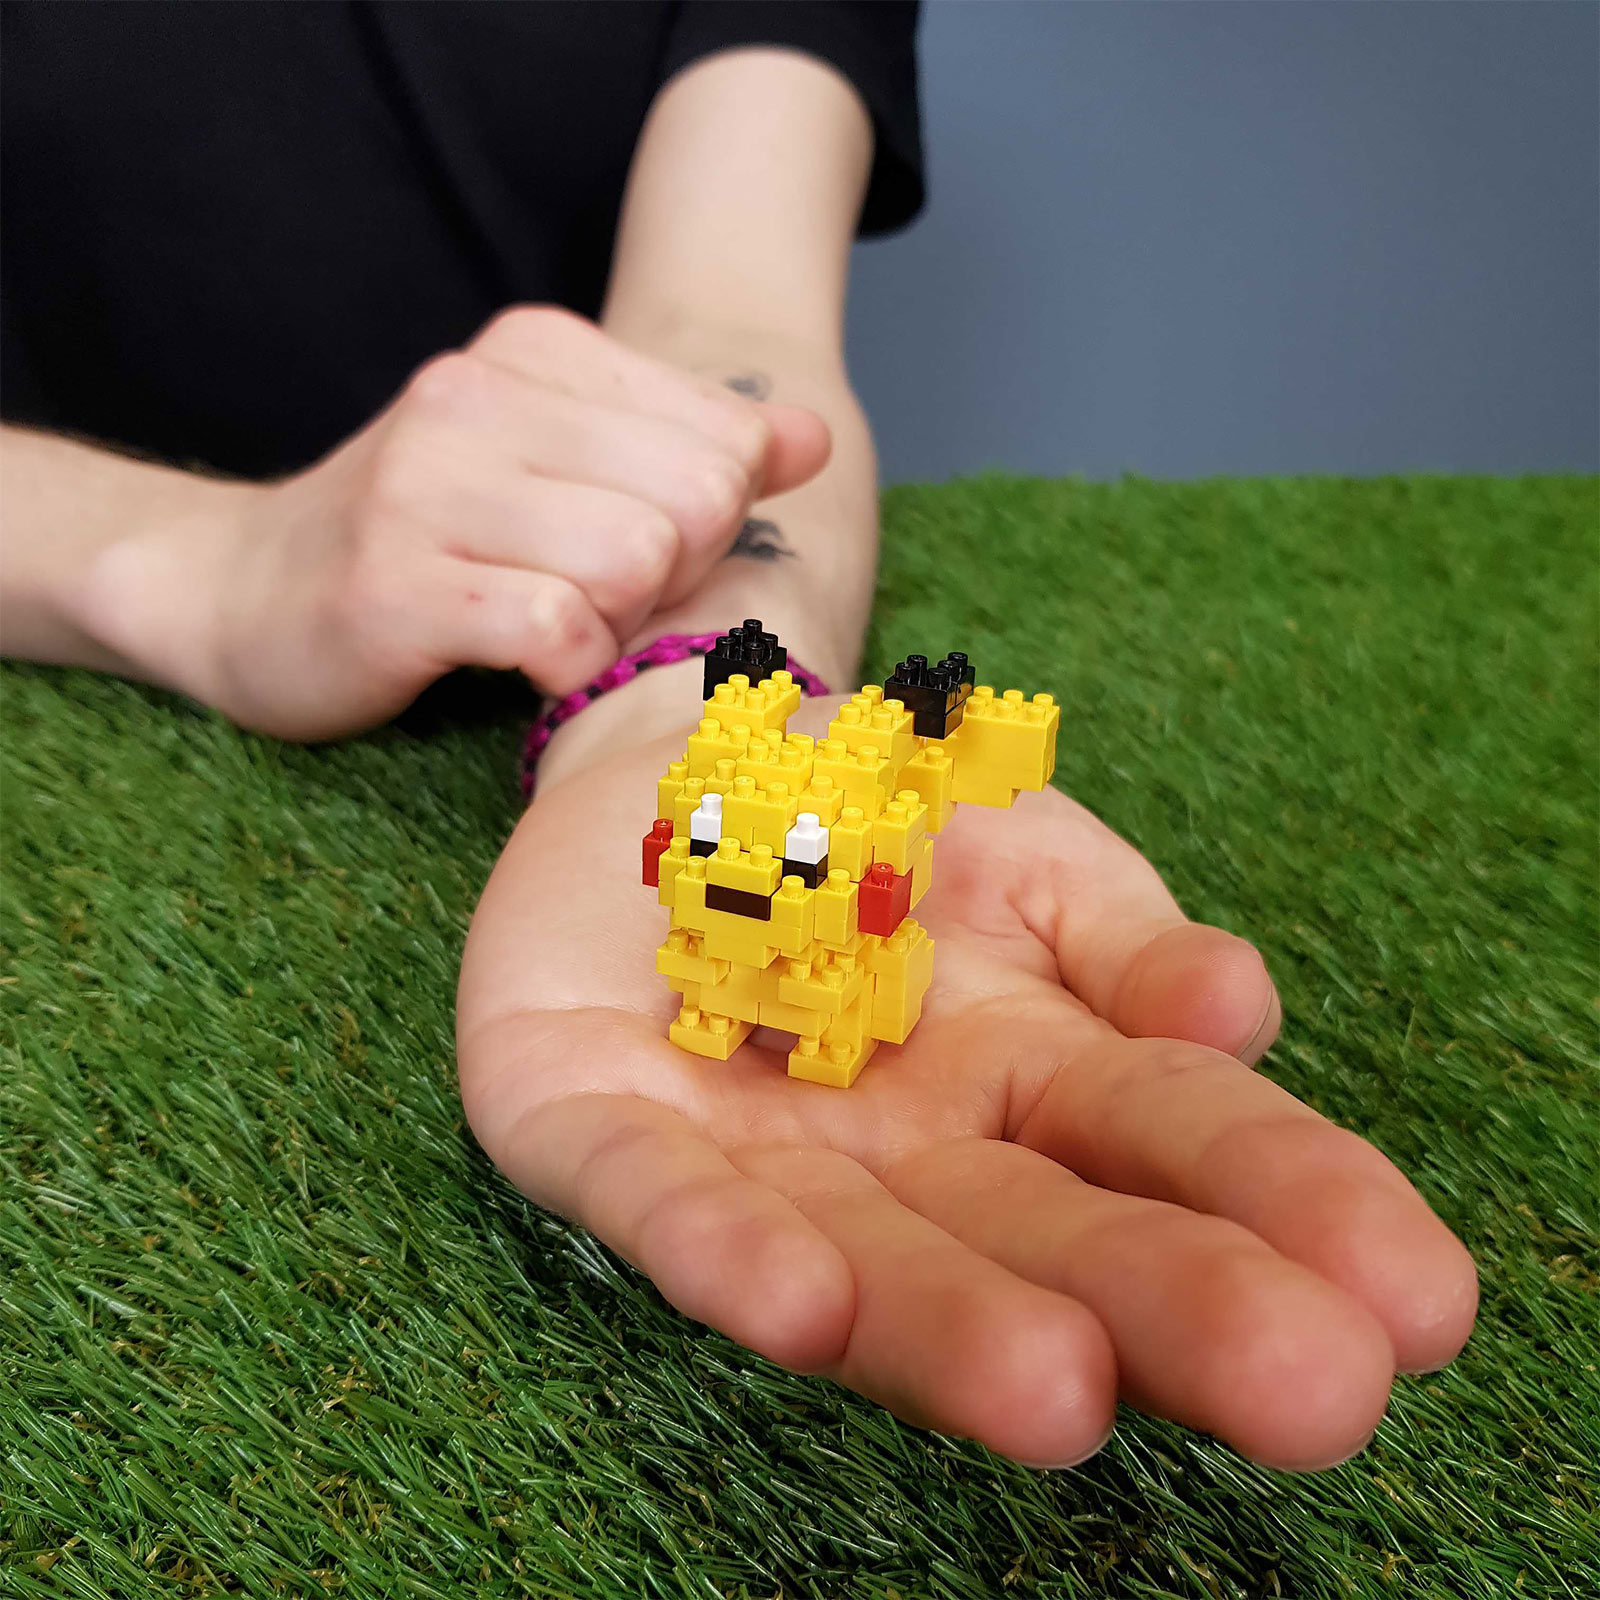 Pokemon - Pikachu nanoblock Mini Bouwsteen Figuur